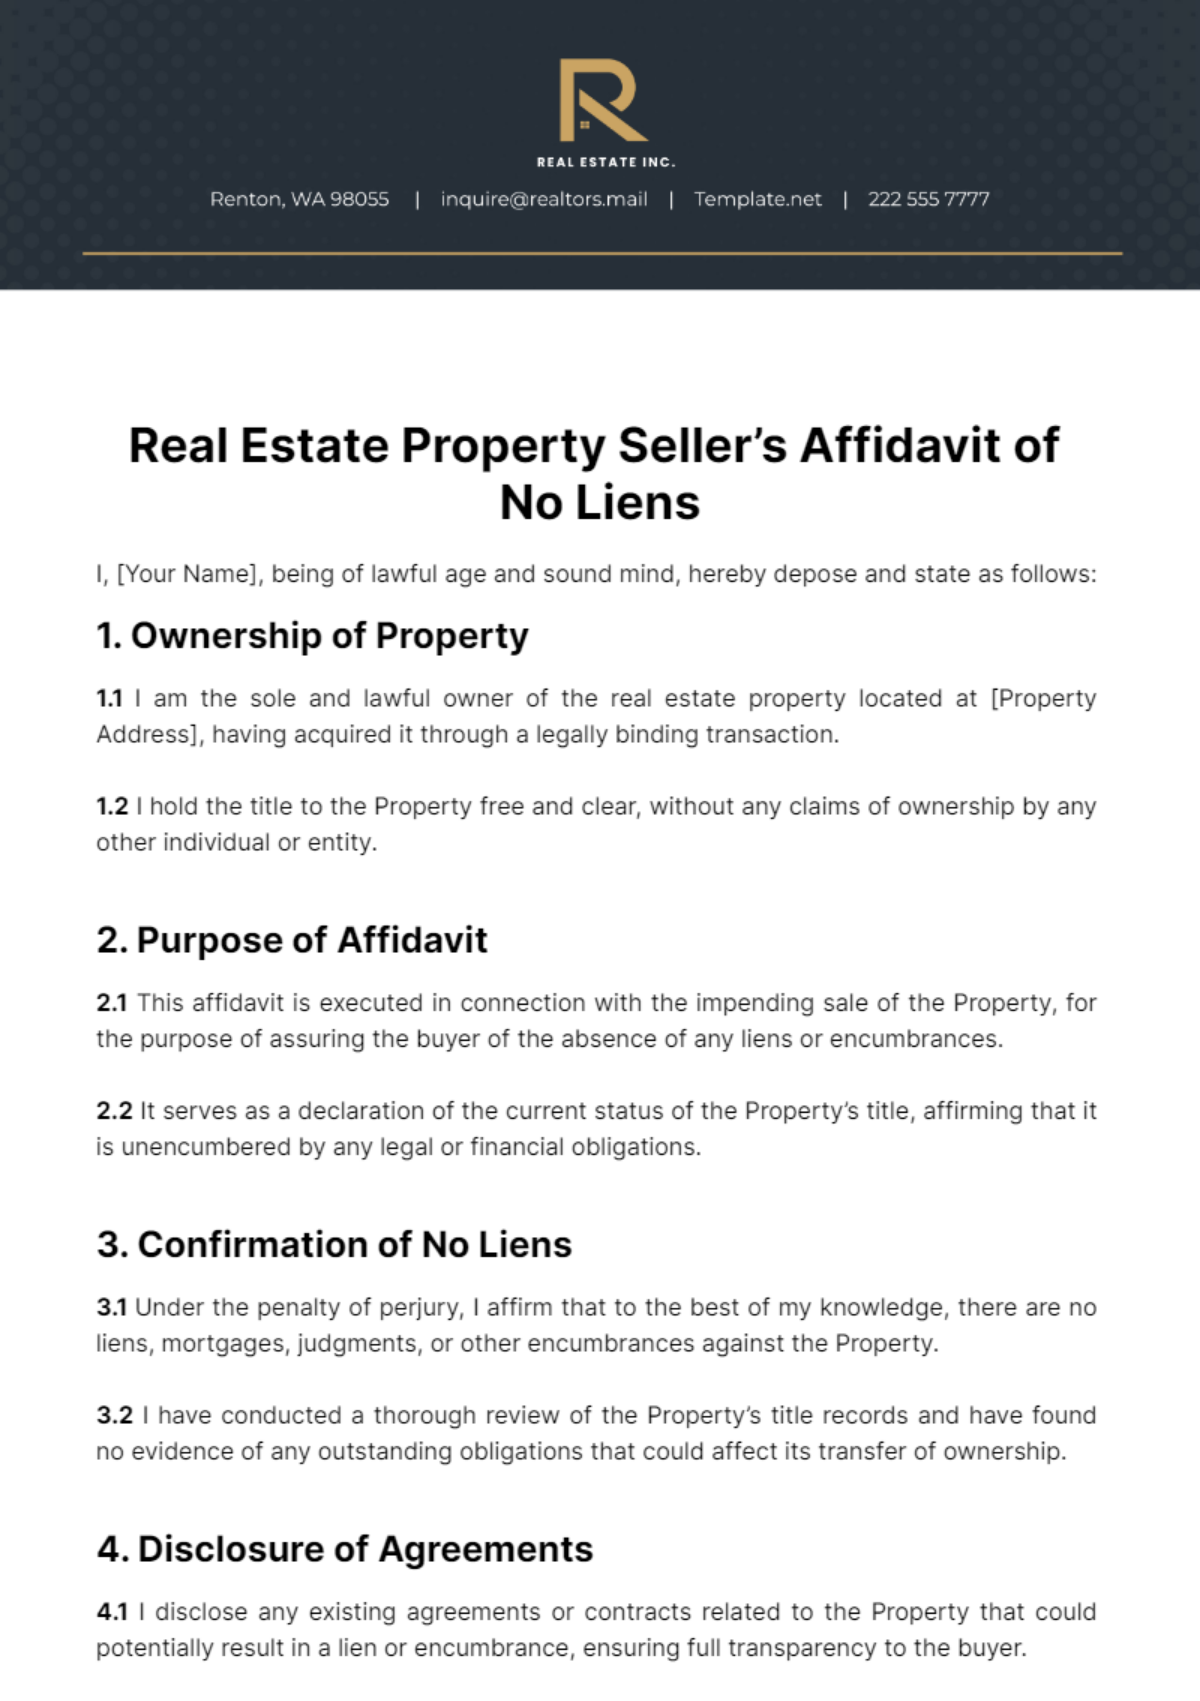 Free Real Estate Property Seller’s Affidavit of No Liens Template